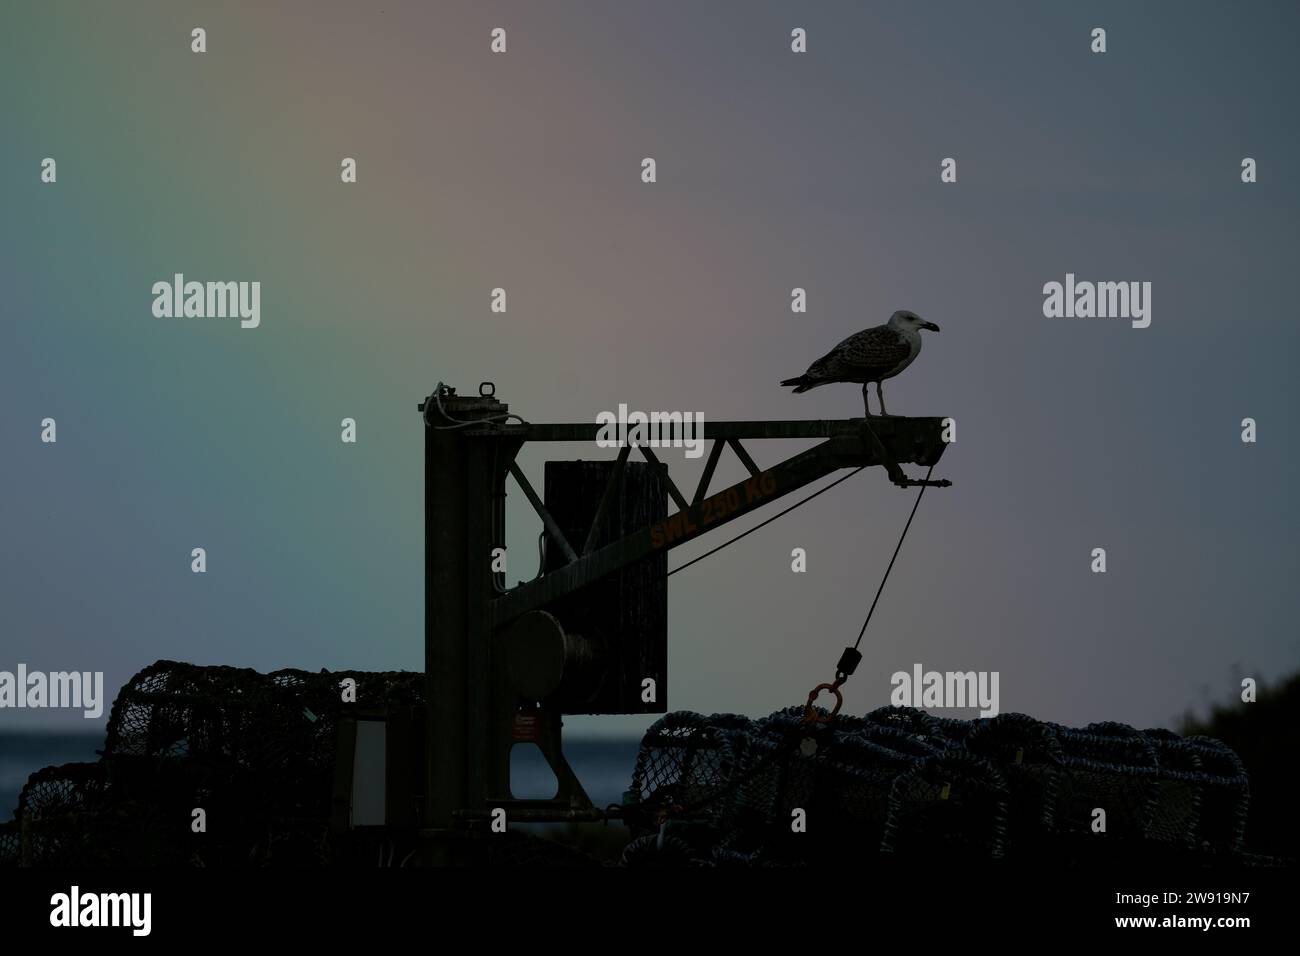 Gull am Hafenkran, Silhouette gegen Regenbogenhimmel. Stockfoto